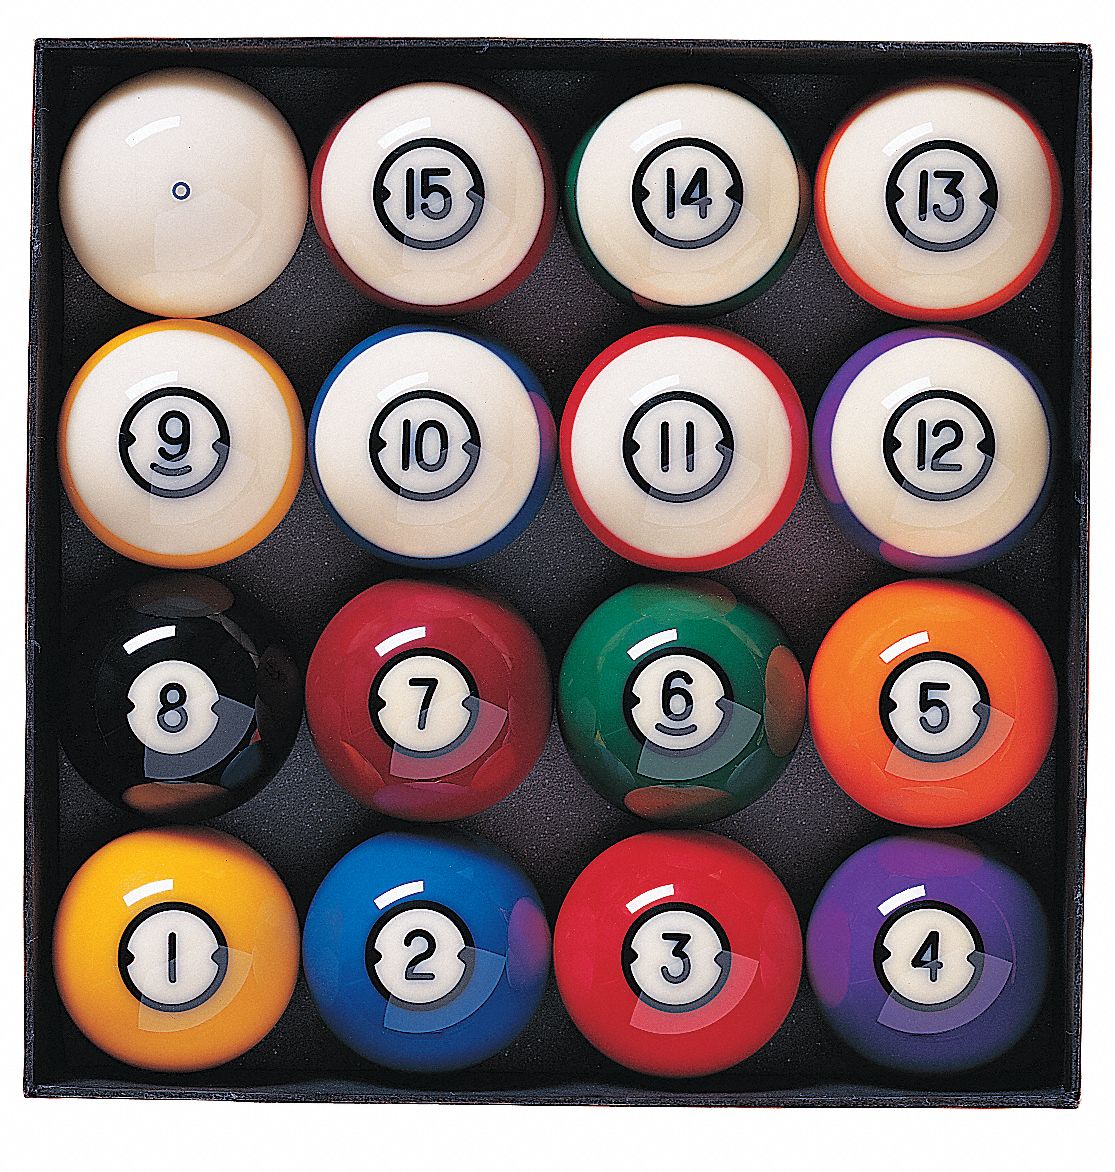 6FZV3 - Billiard Balls Set